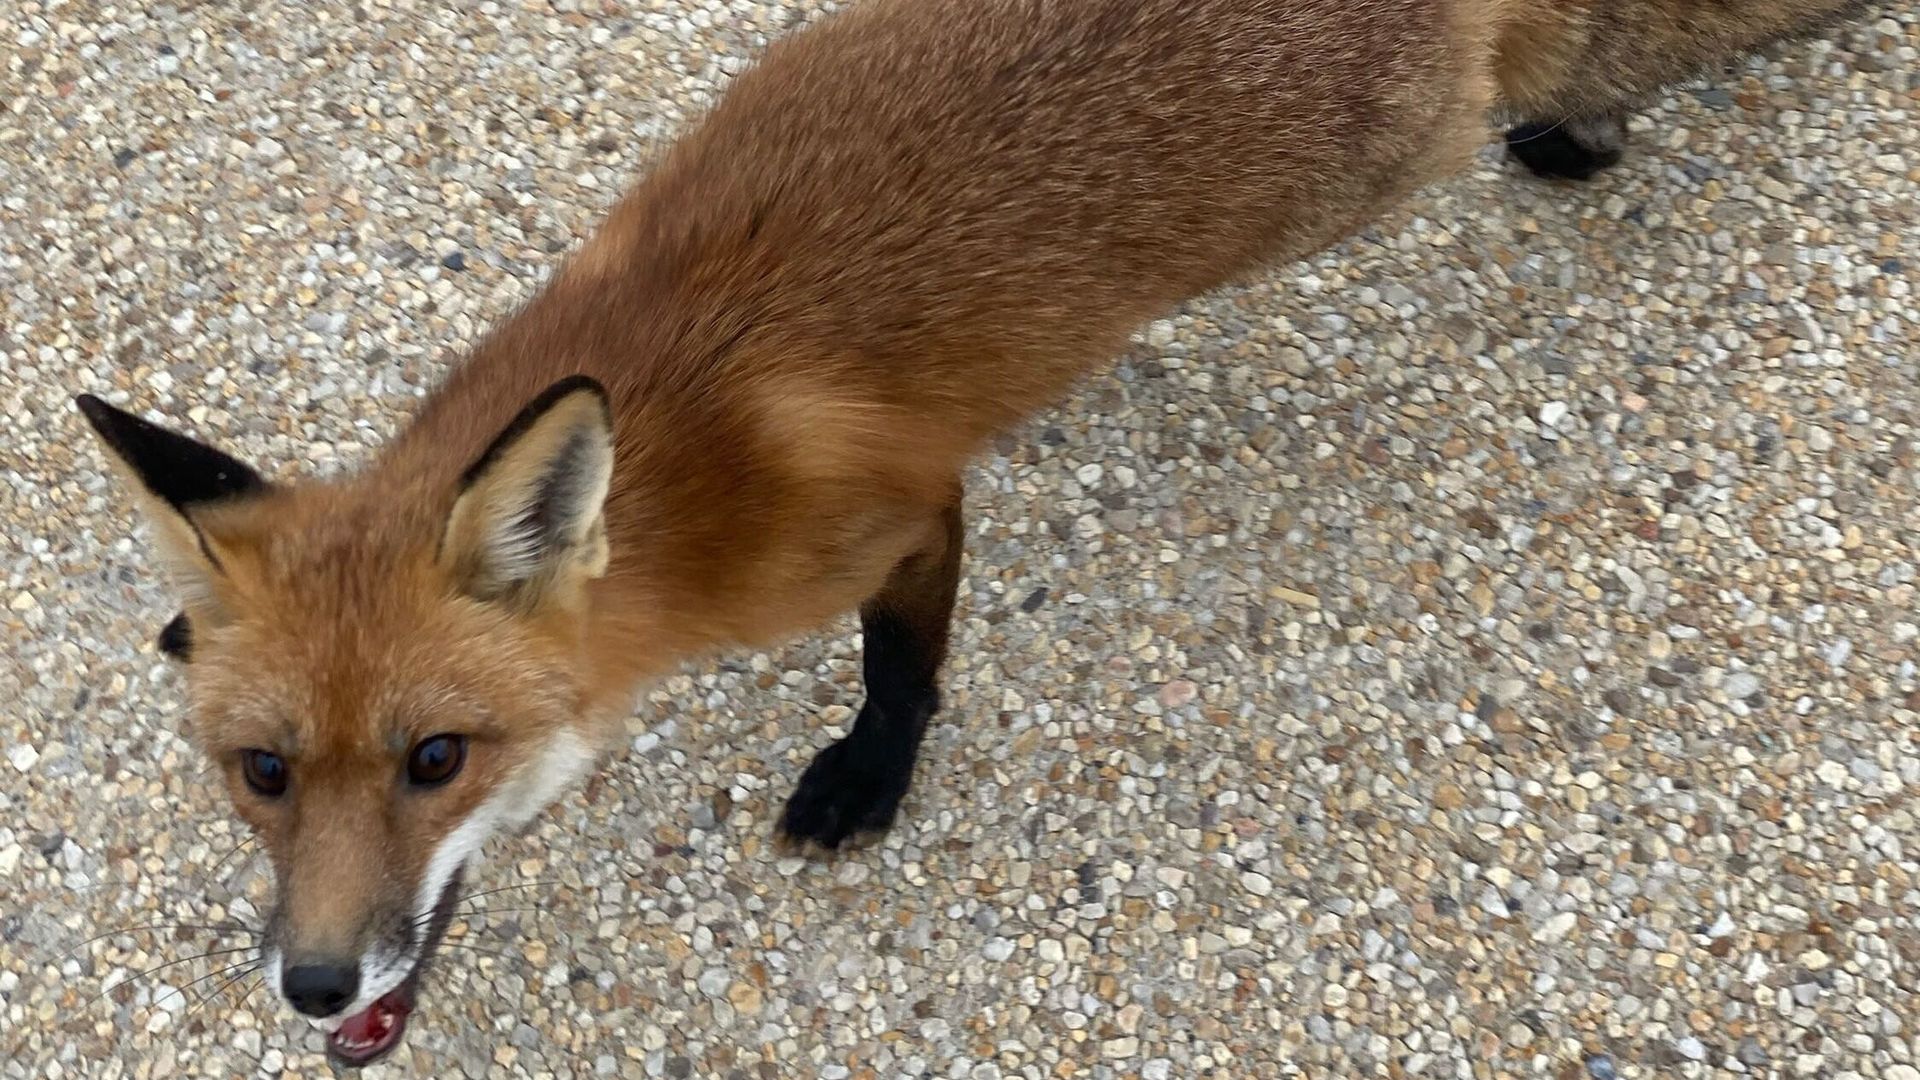 The Capitol Hill fox